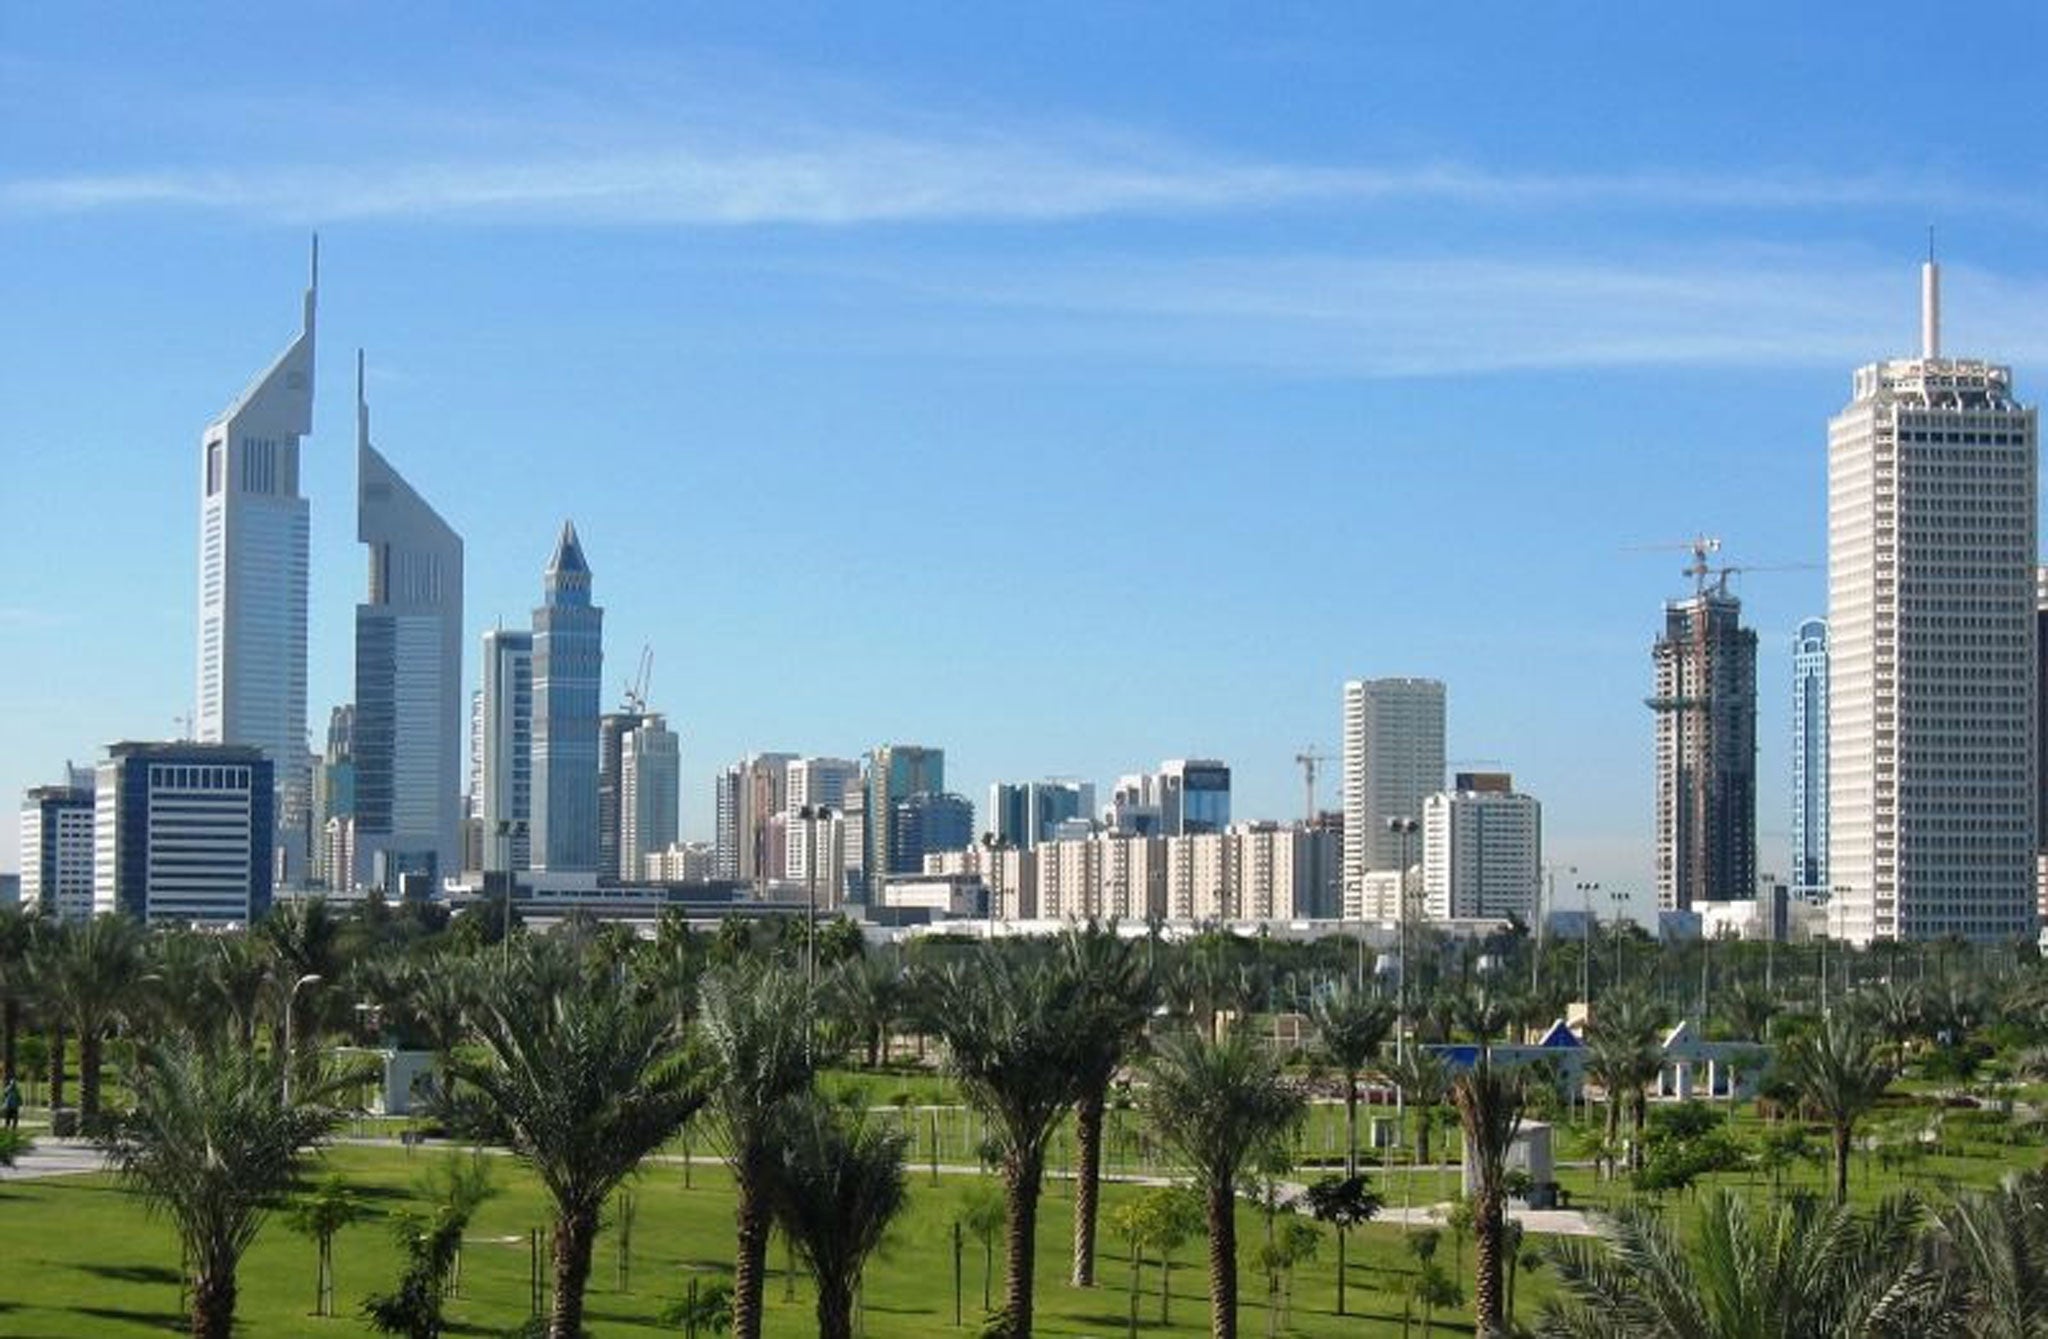 Dubai: the Cop roadshow comes to town in 2023